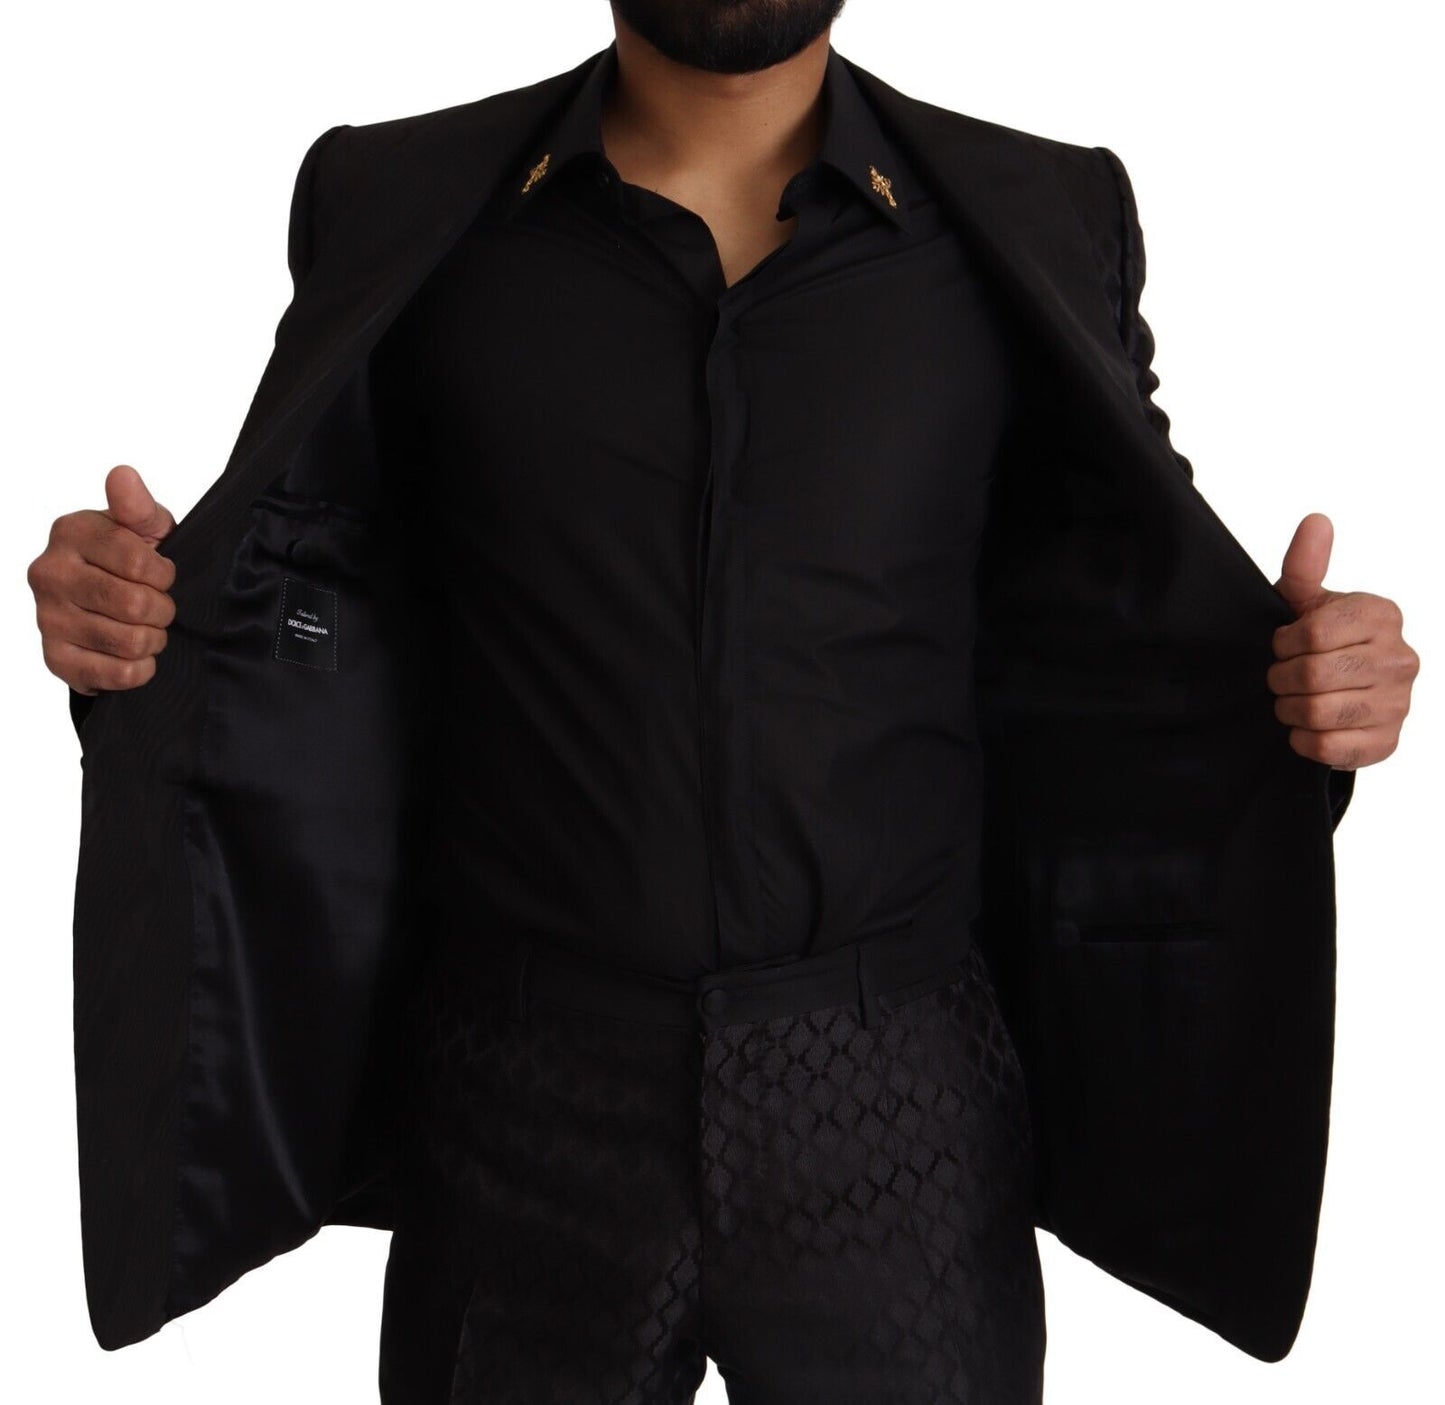 Elegant Black Silk Two-Piece Suit